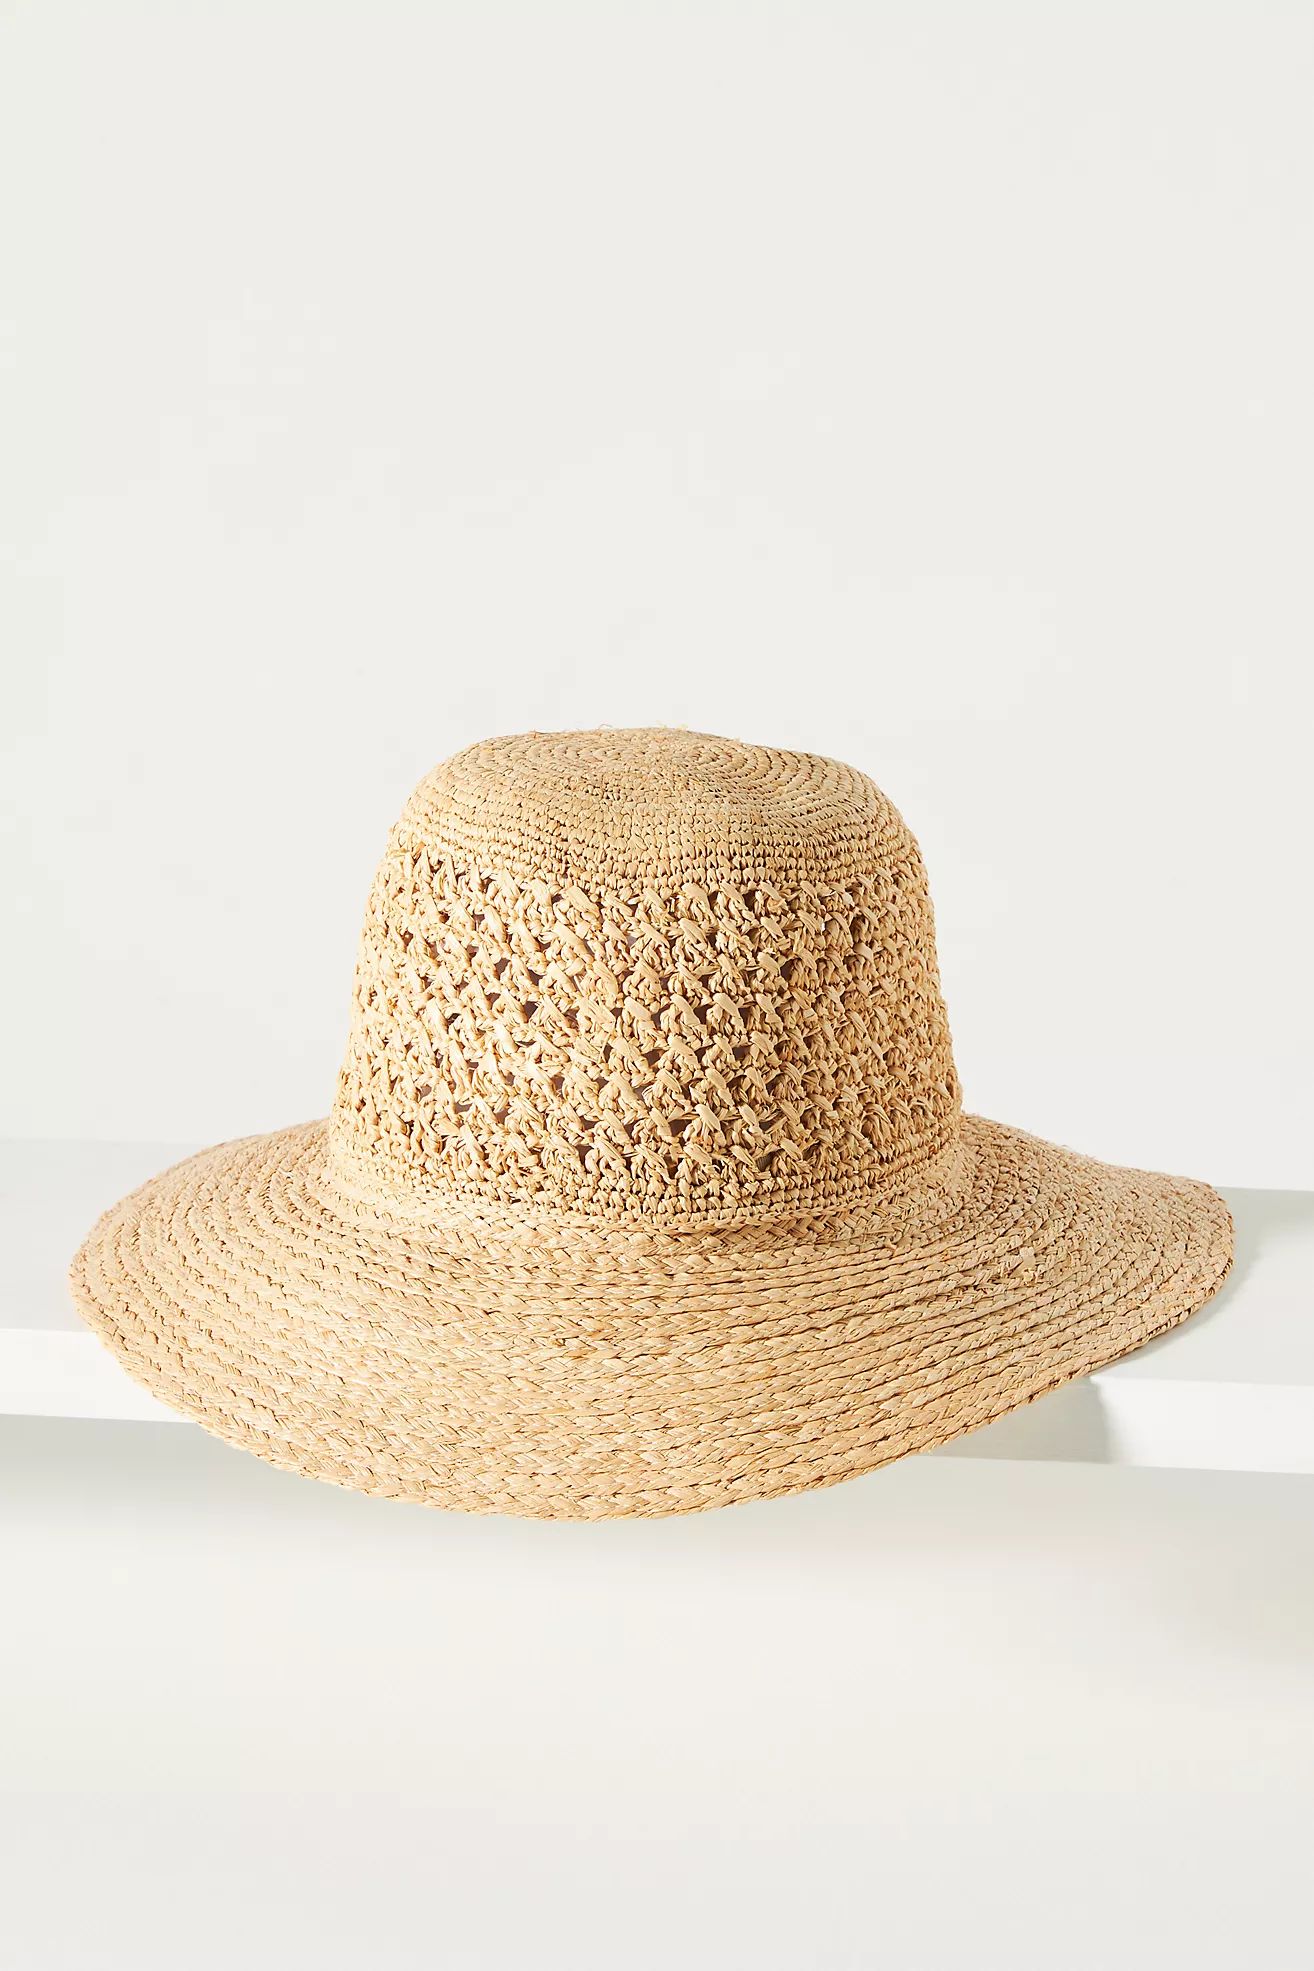 San Diego Hat Co. Crochet Bucket Hat | Anthropologie (US)